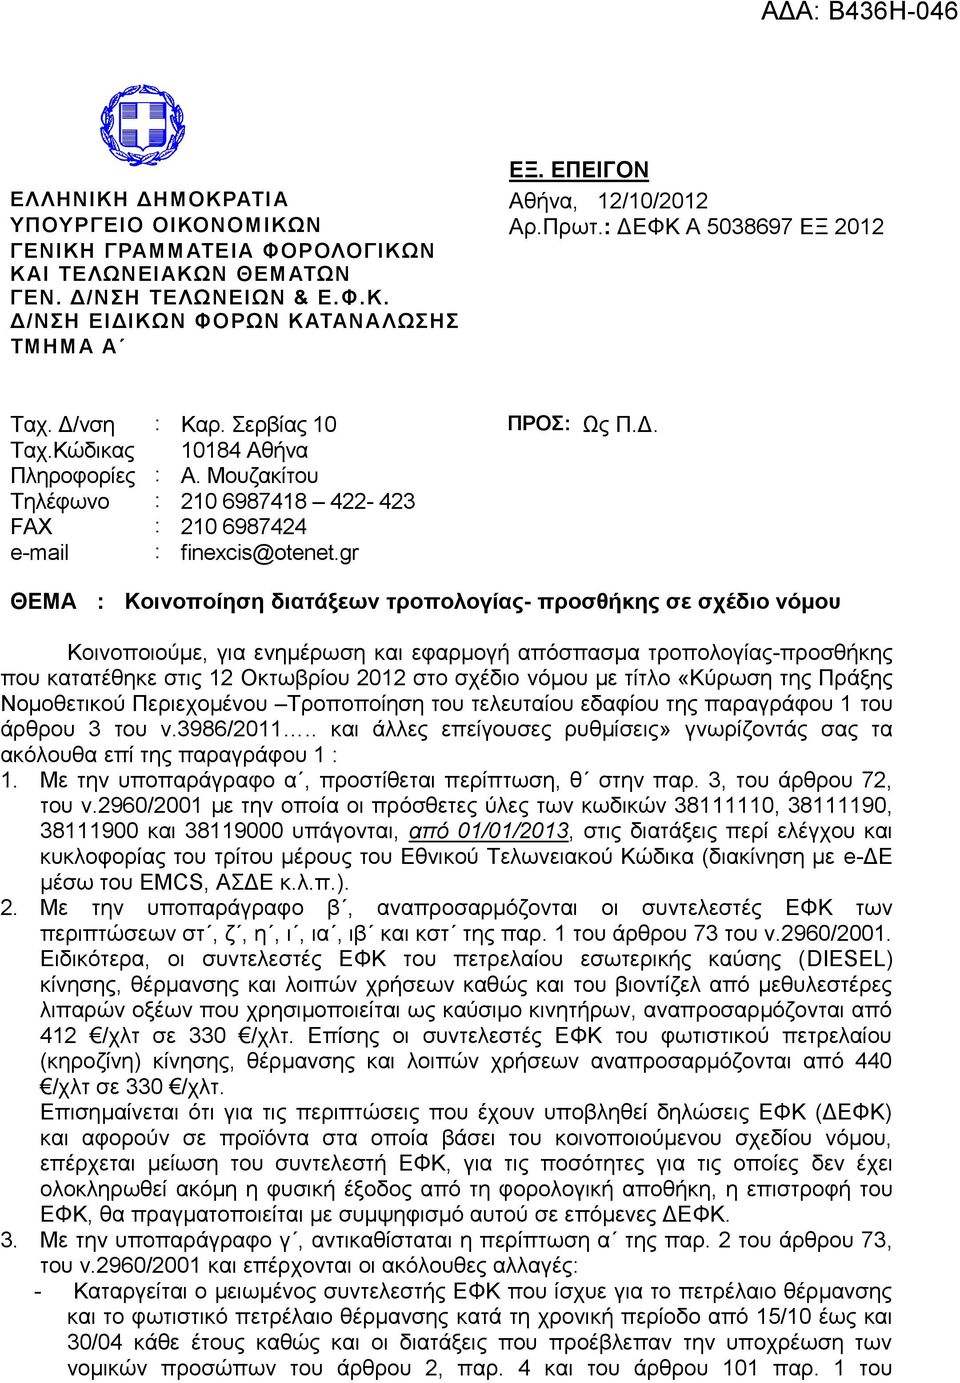 gr ΘΕΜΑ : Κοινοποίηζη διαηάξεων ηποπολογίαρ- πποζθήκηρ ζε ζσέδιο νόμος Κνηλνπνηνύκε, γηα ελεκέξσζε θαη εθαξκνγή απόζπαζκα ηξνπνινγίαο-πξνζζήθεο πνπ θαηαηέζεθε ζηηο 12 Οθησβξίνπ 2012 ζην ζρέδην λόκνπ